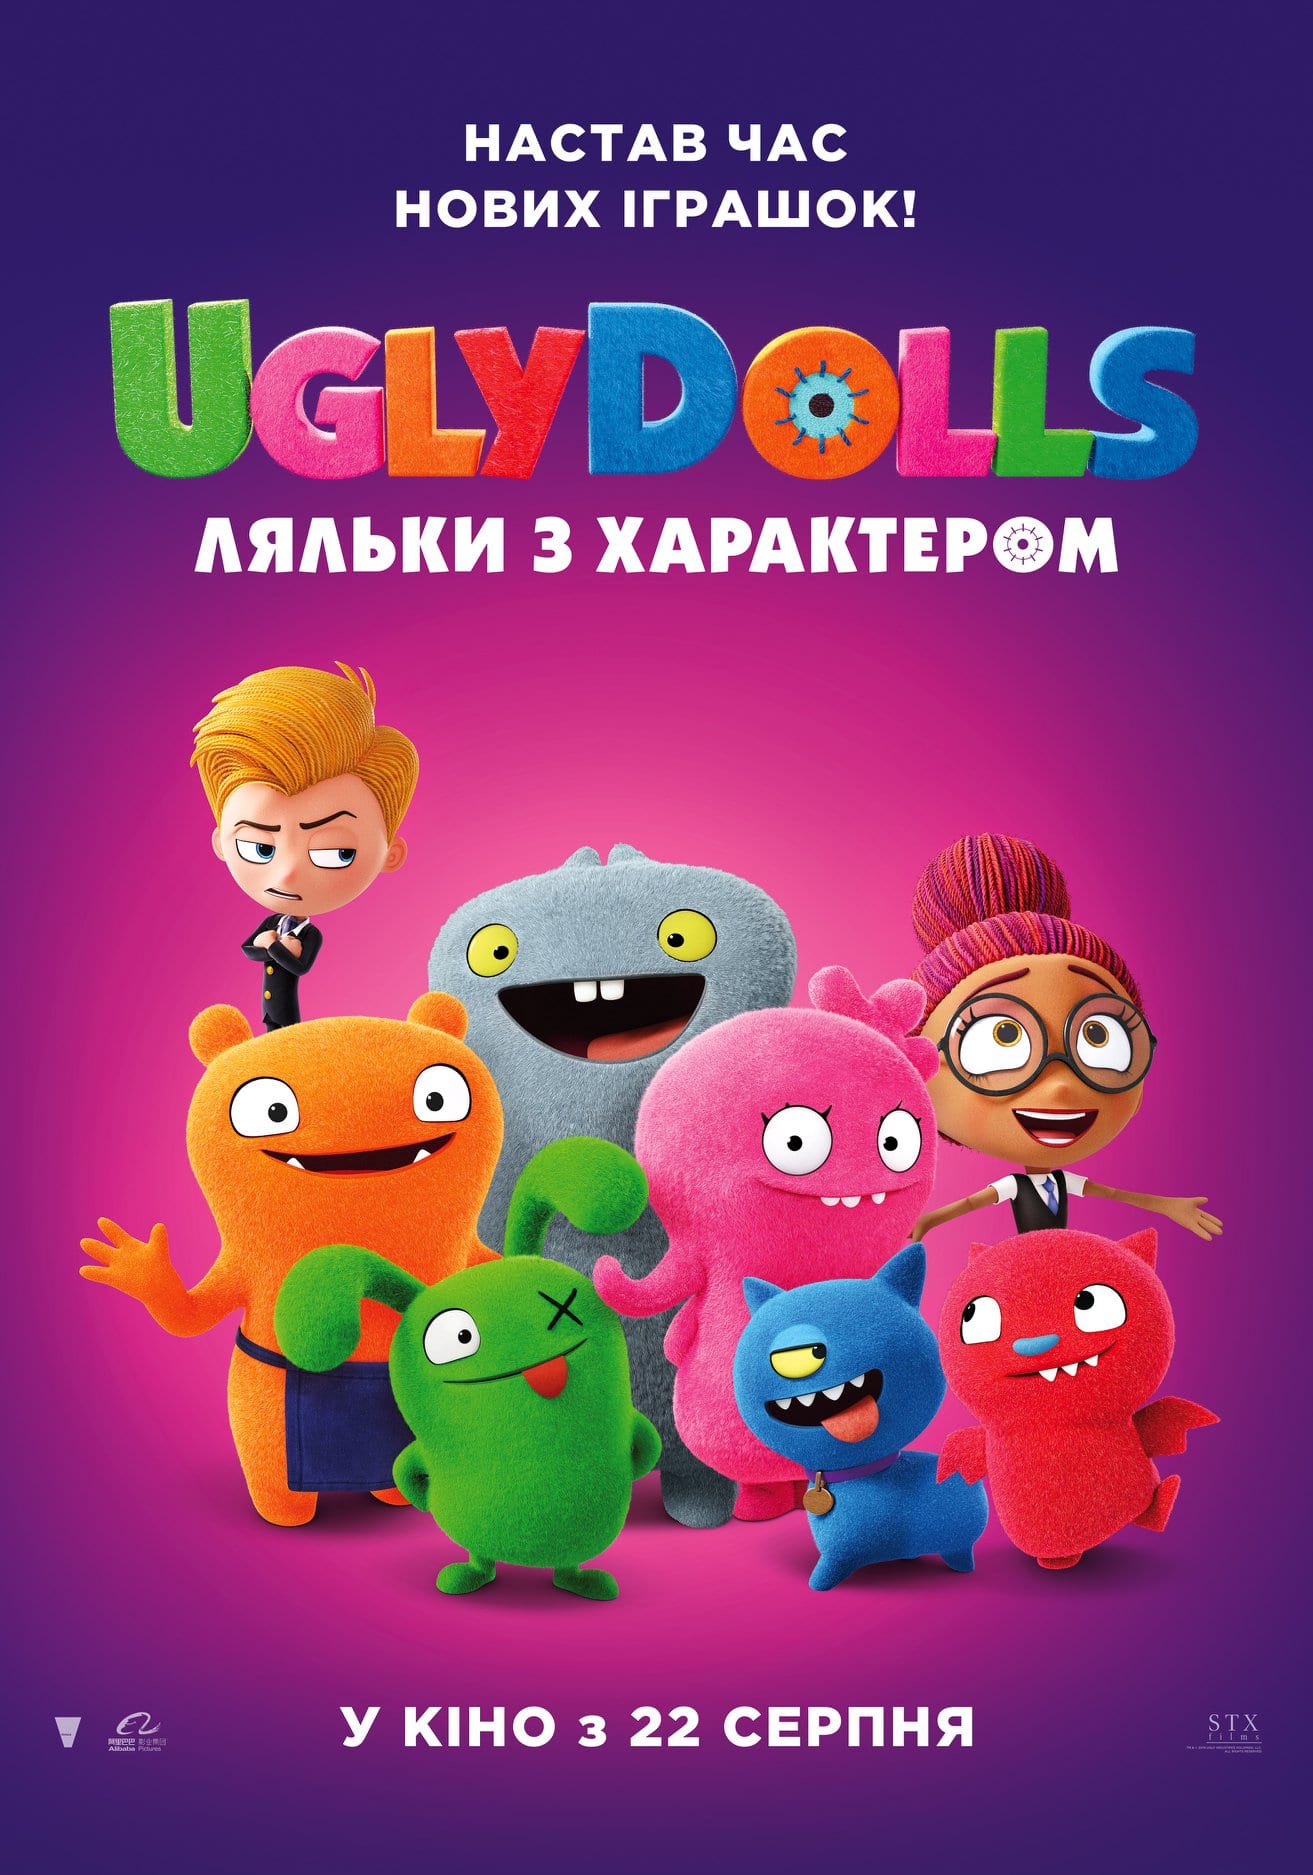 UglyDolls. Куклы с характером - Днепр, расписание сеансов, цены. Афиша Днепра